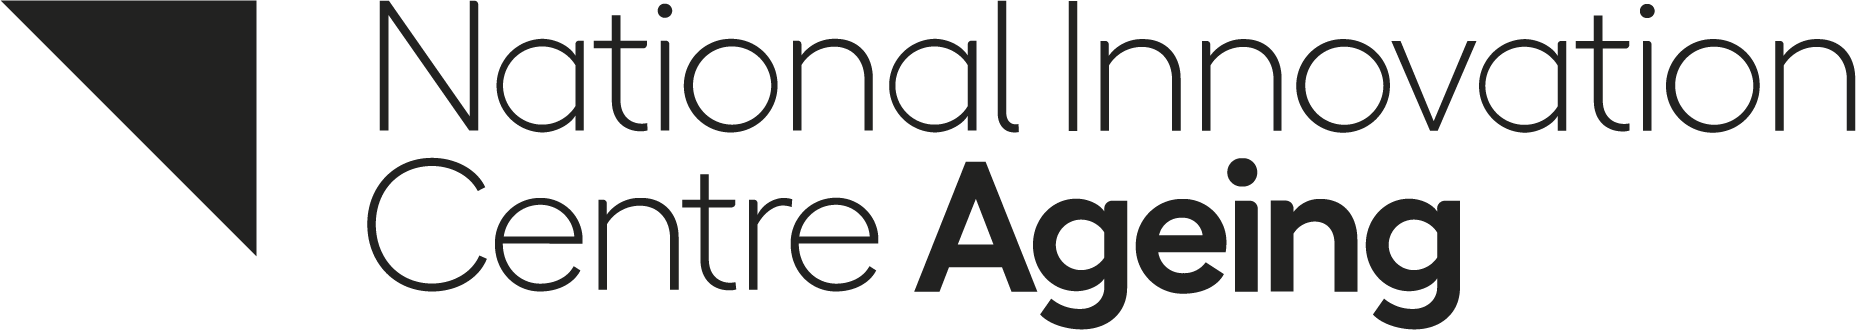 National Innovation Centre Ageing Logo